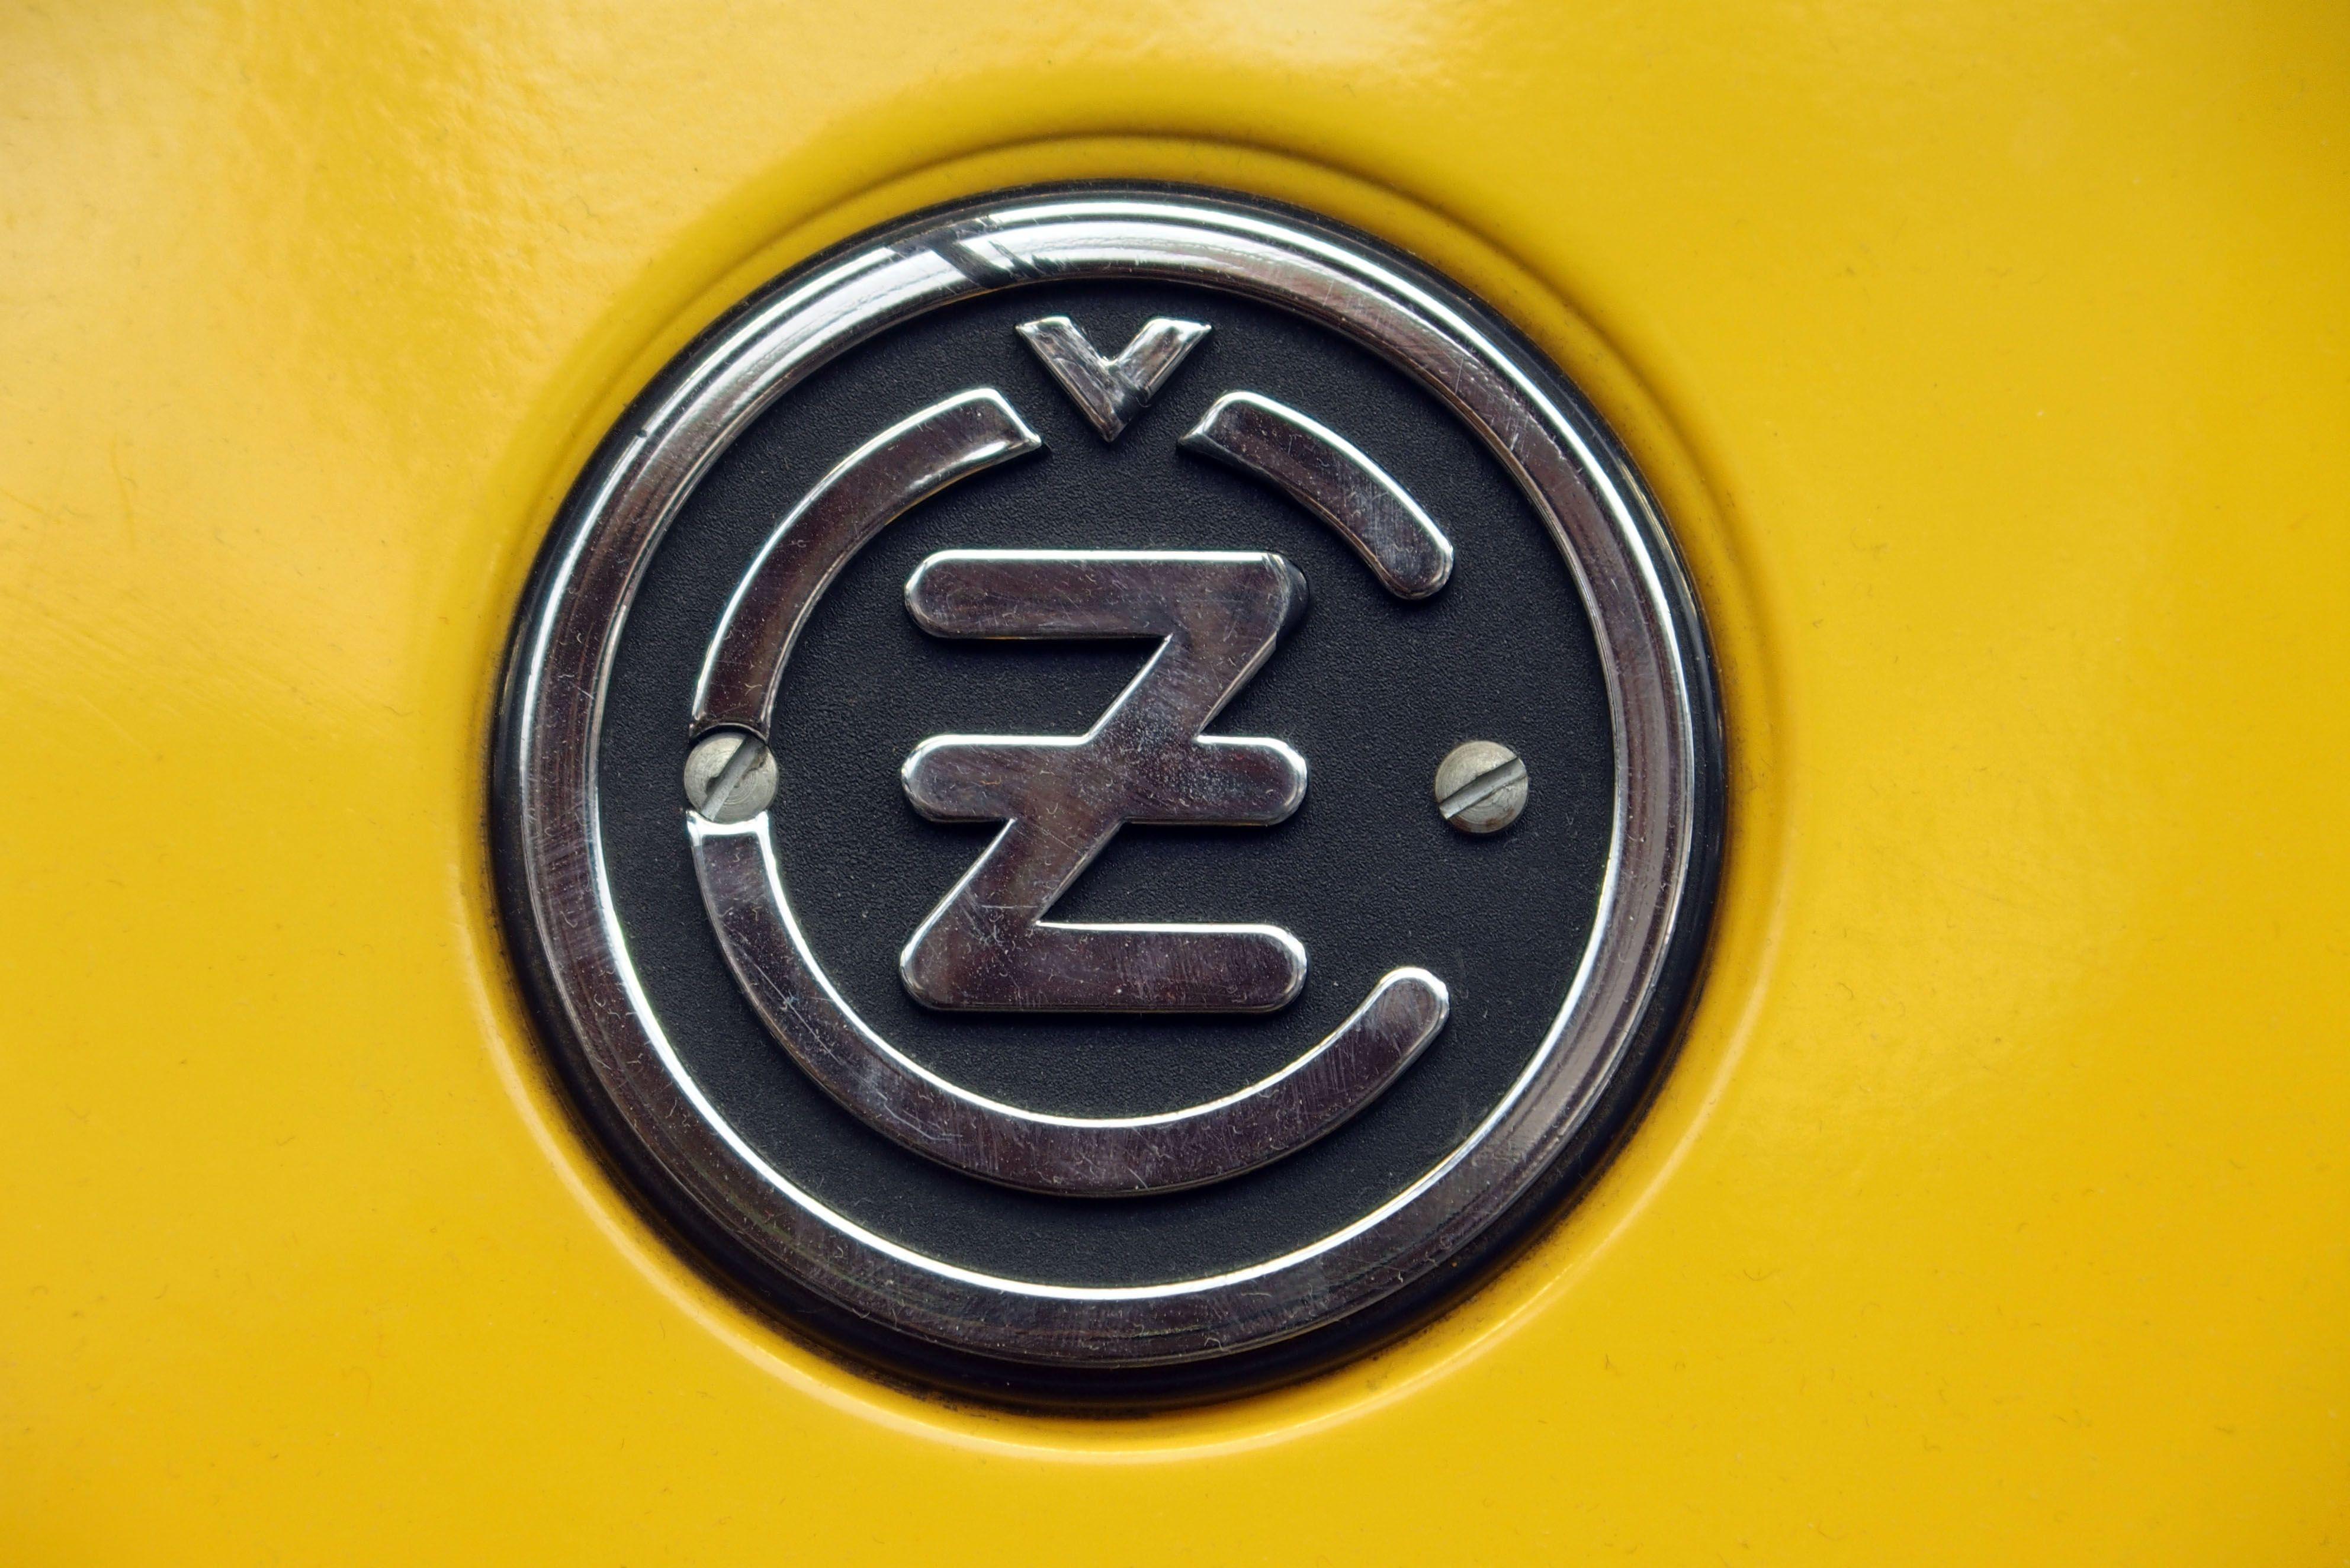 Motorcycle Tank Logo - File:CZ logo on motorcycle tank.jpg - Wikimedia Commons